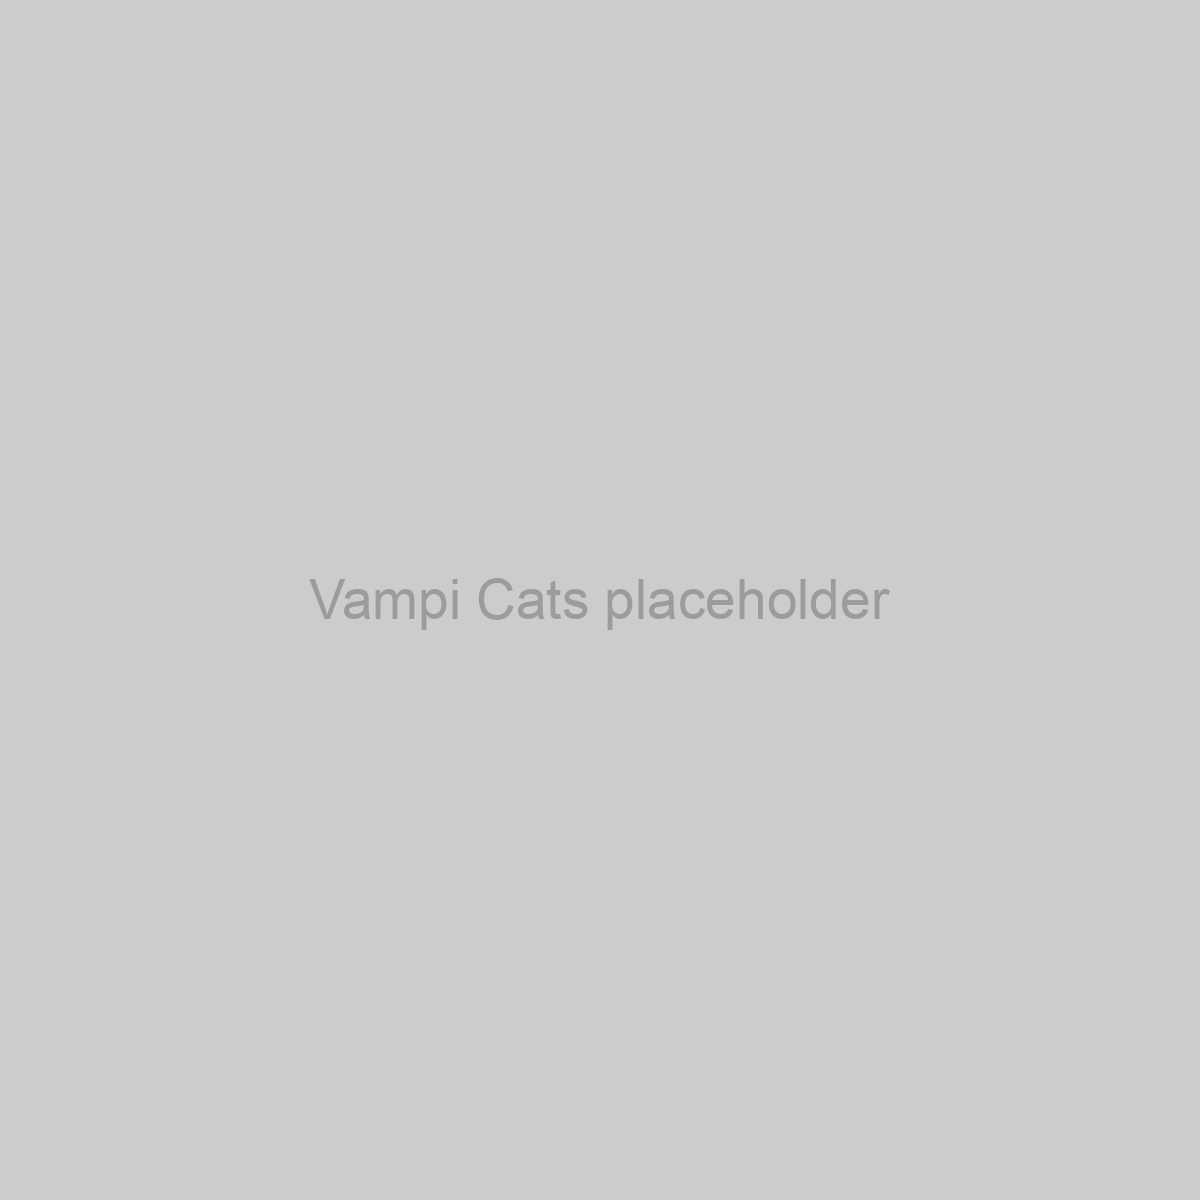 Vampi Cats Placeholder Image